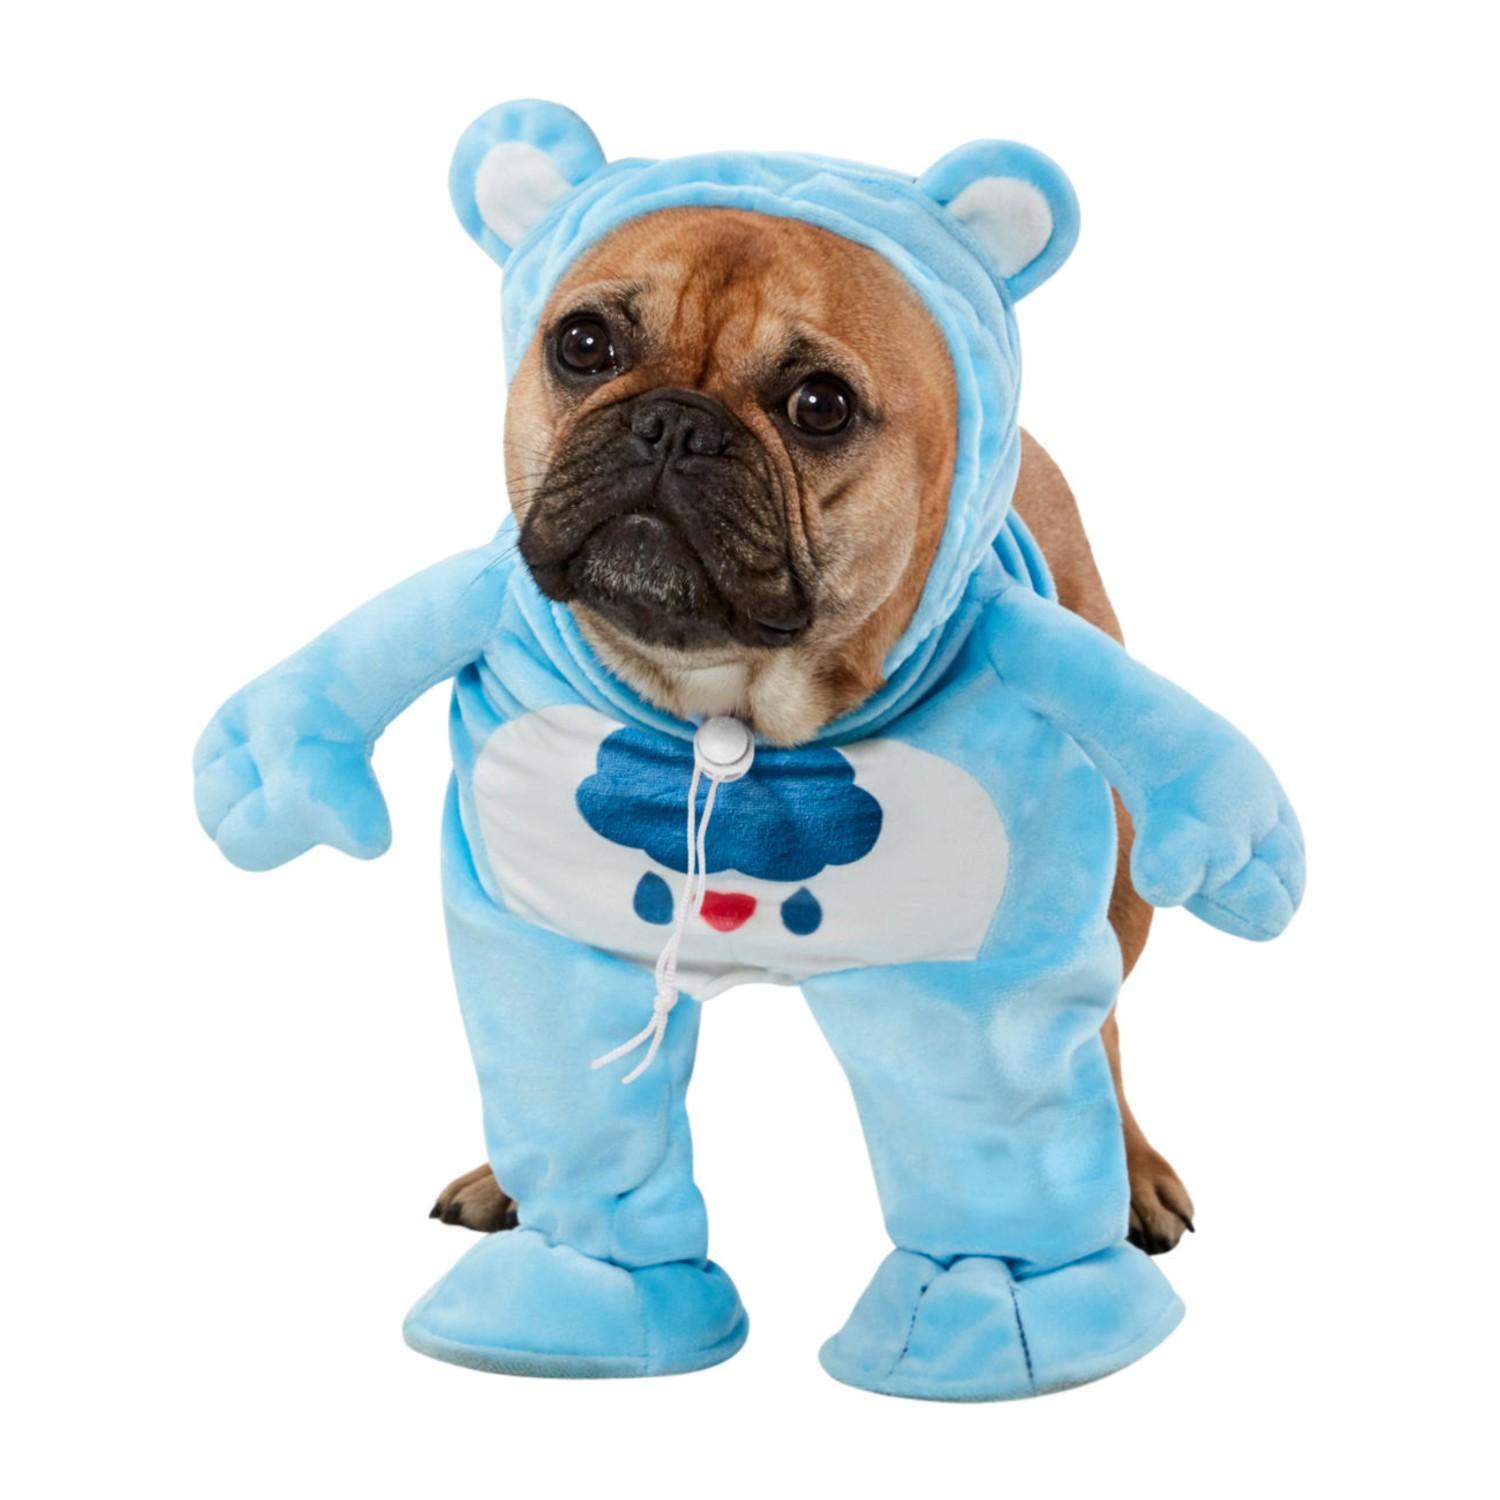 Care Bears Dog Costume by Rubie's - Grumpy Bear